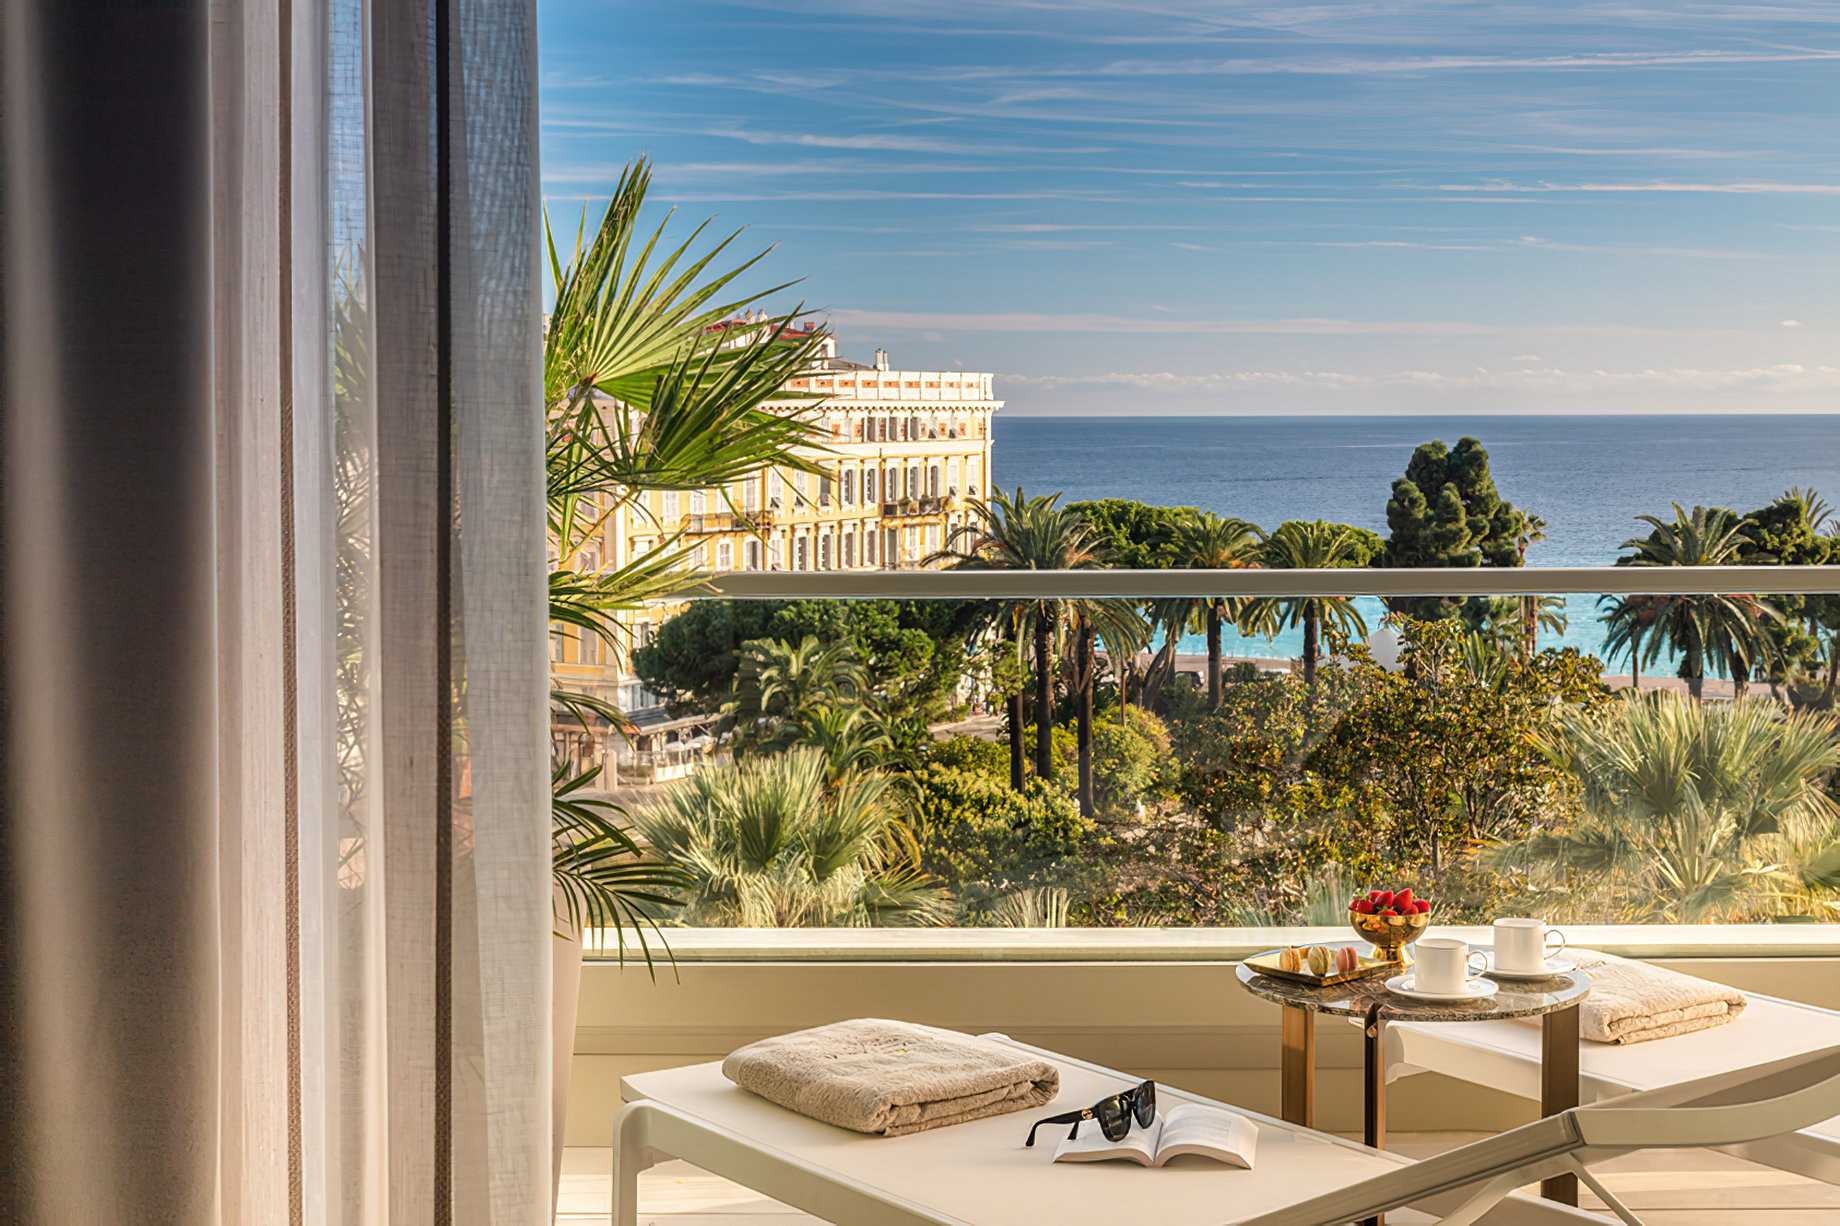 Anantara Plaza Nice Hotel – Nice, France – Deluxe Panorama Room View